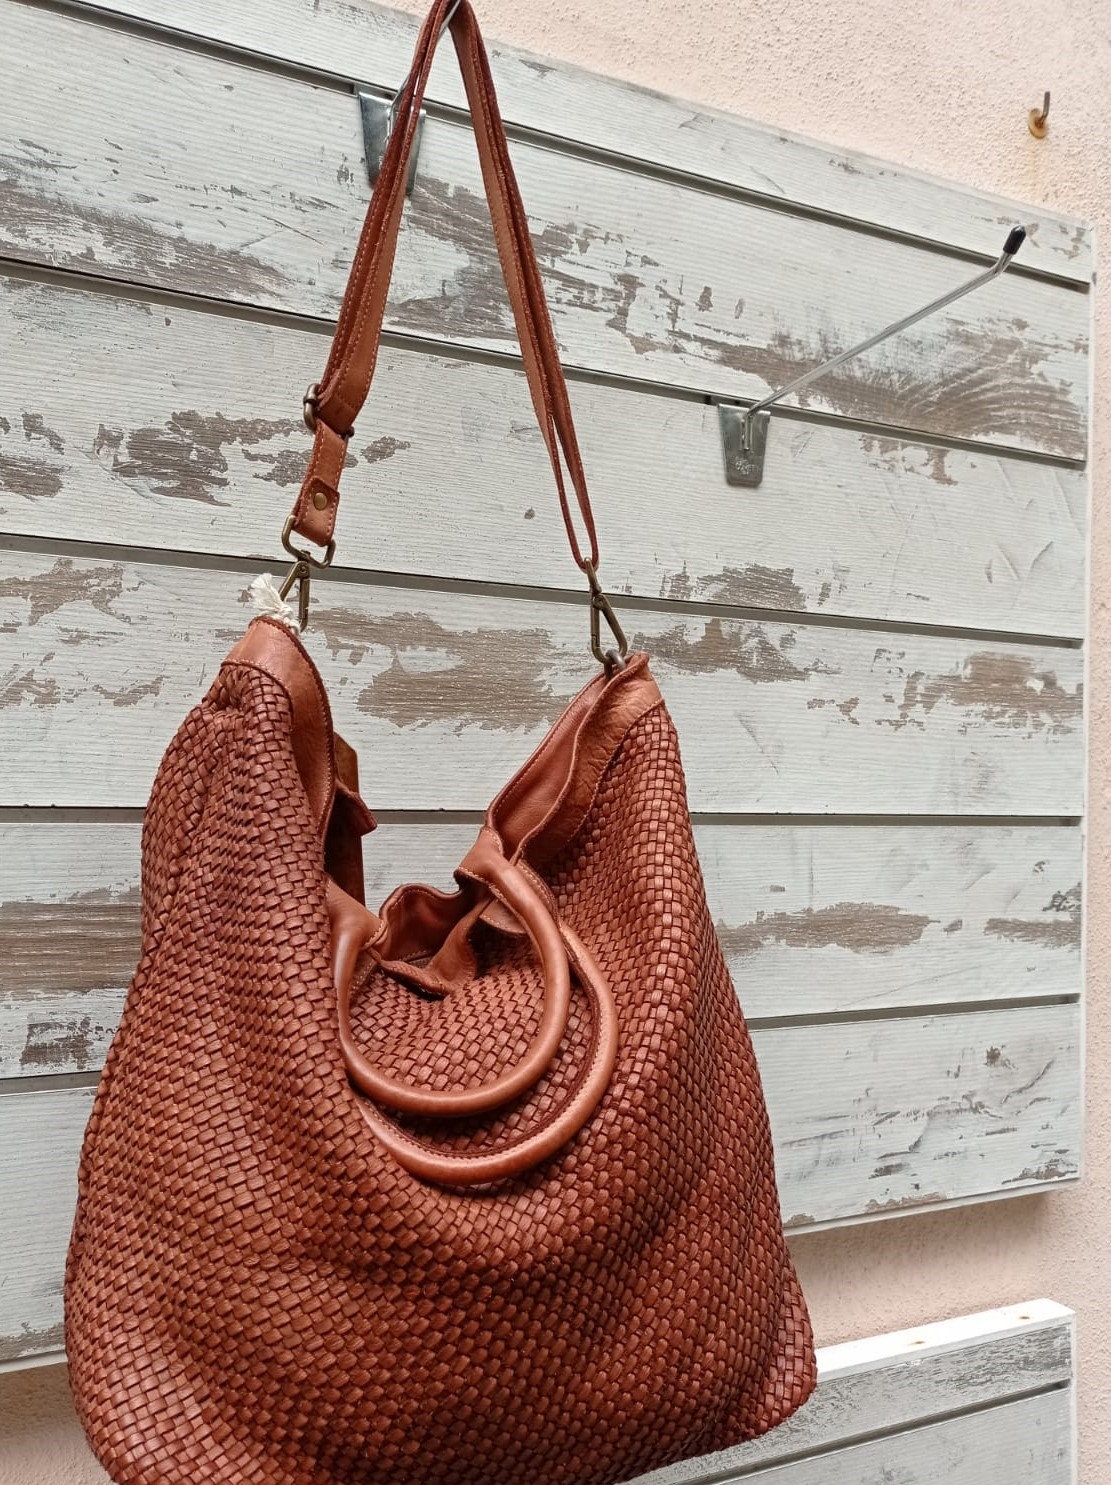 Woven leather bag bag | Etsy